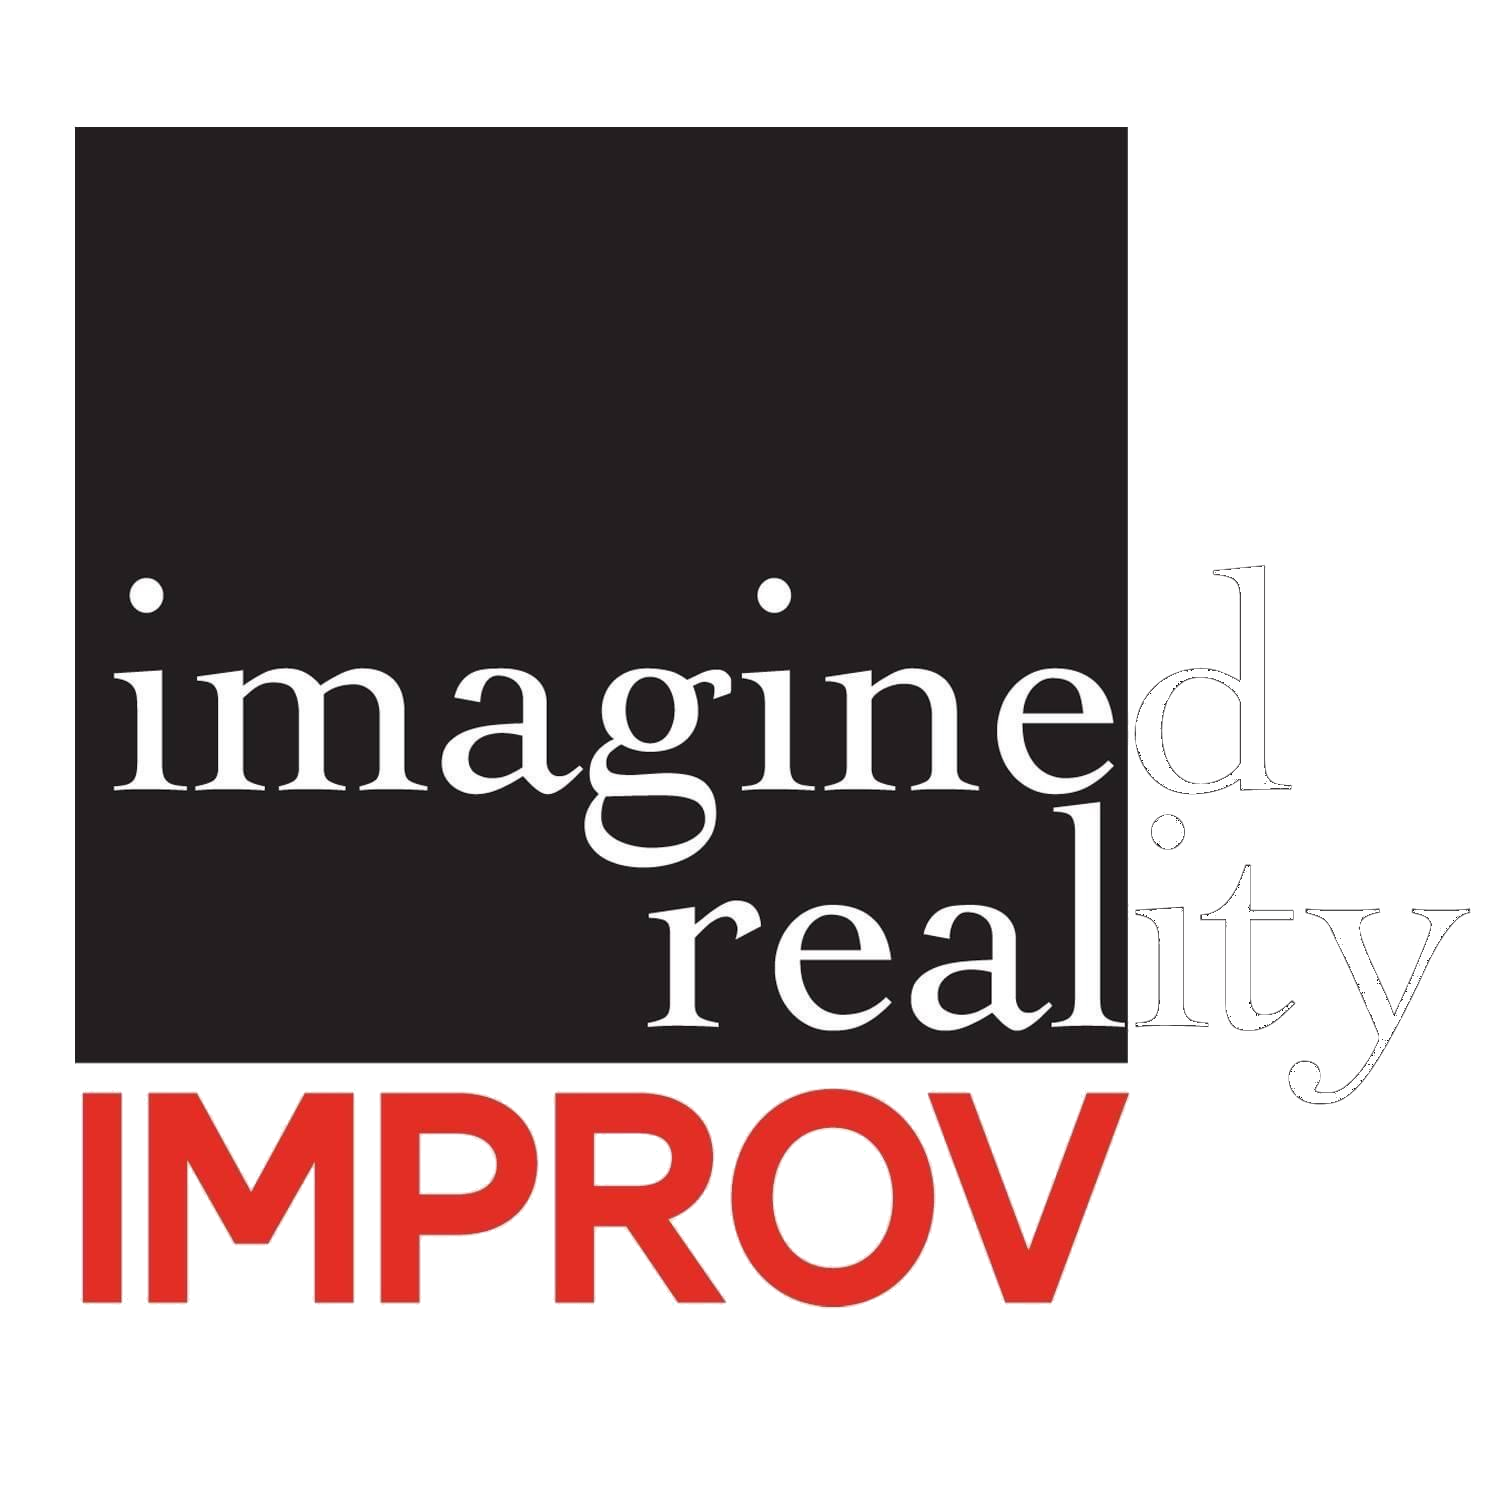 Imagined Reality Improv